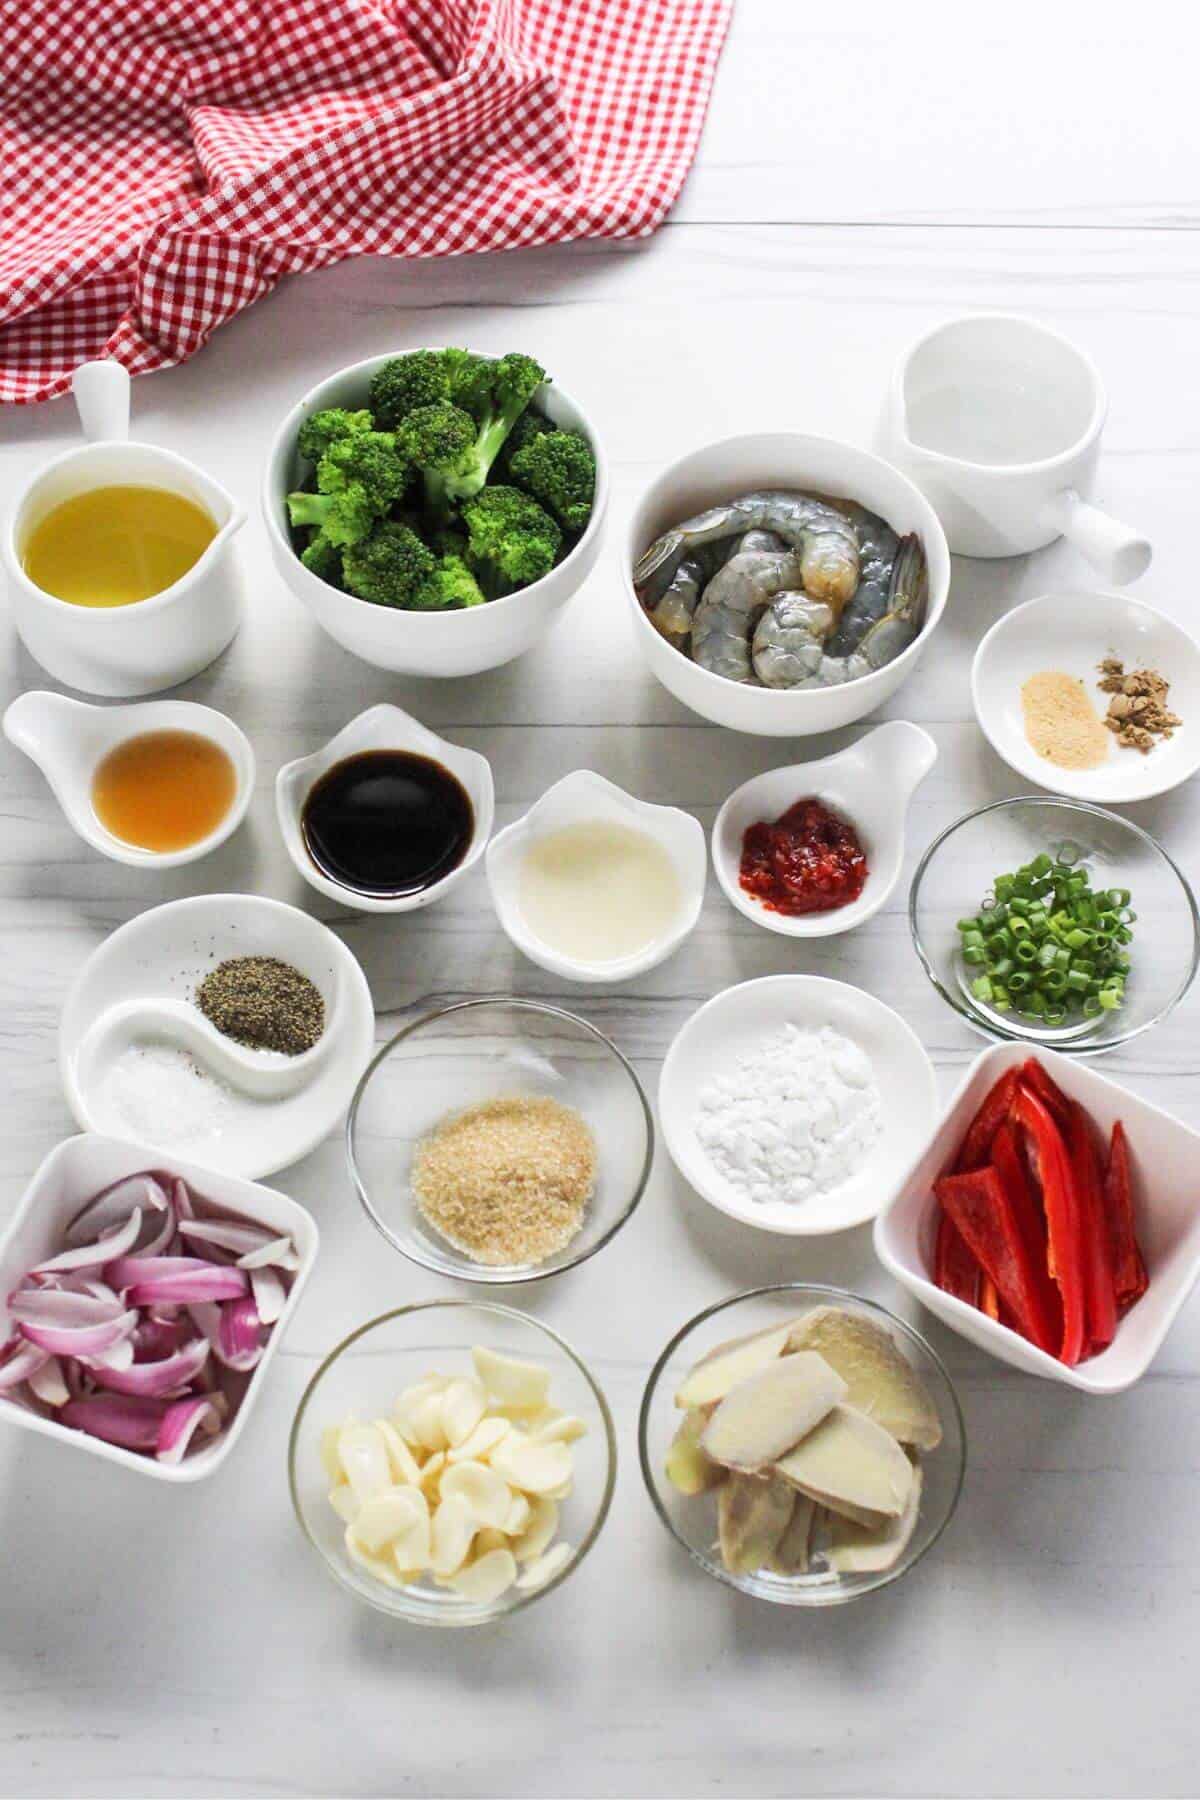 Ingredients for shrimp broccoli stir fry recipe.